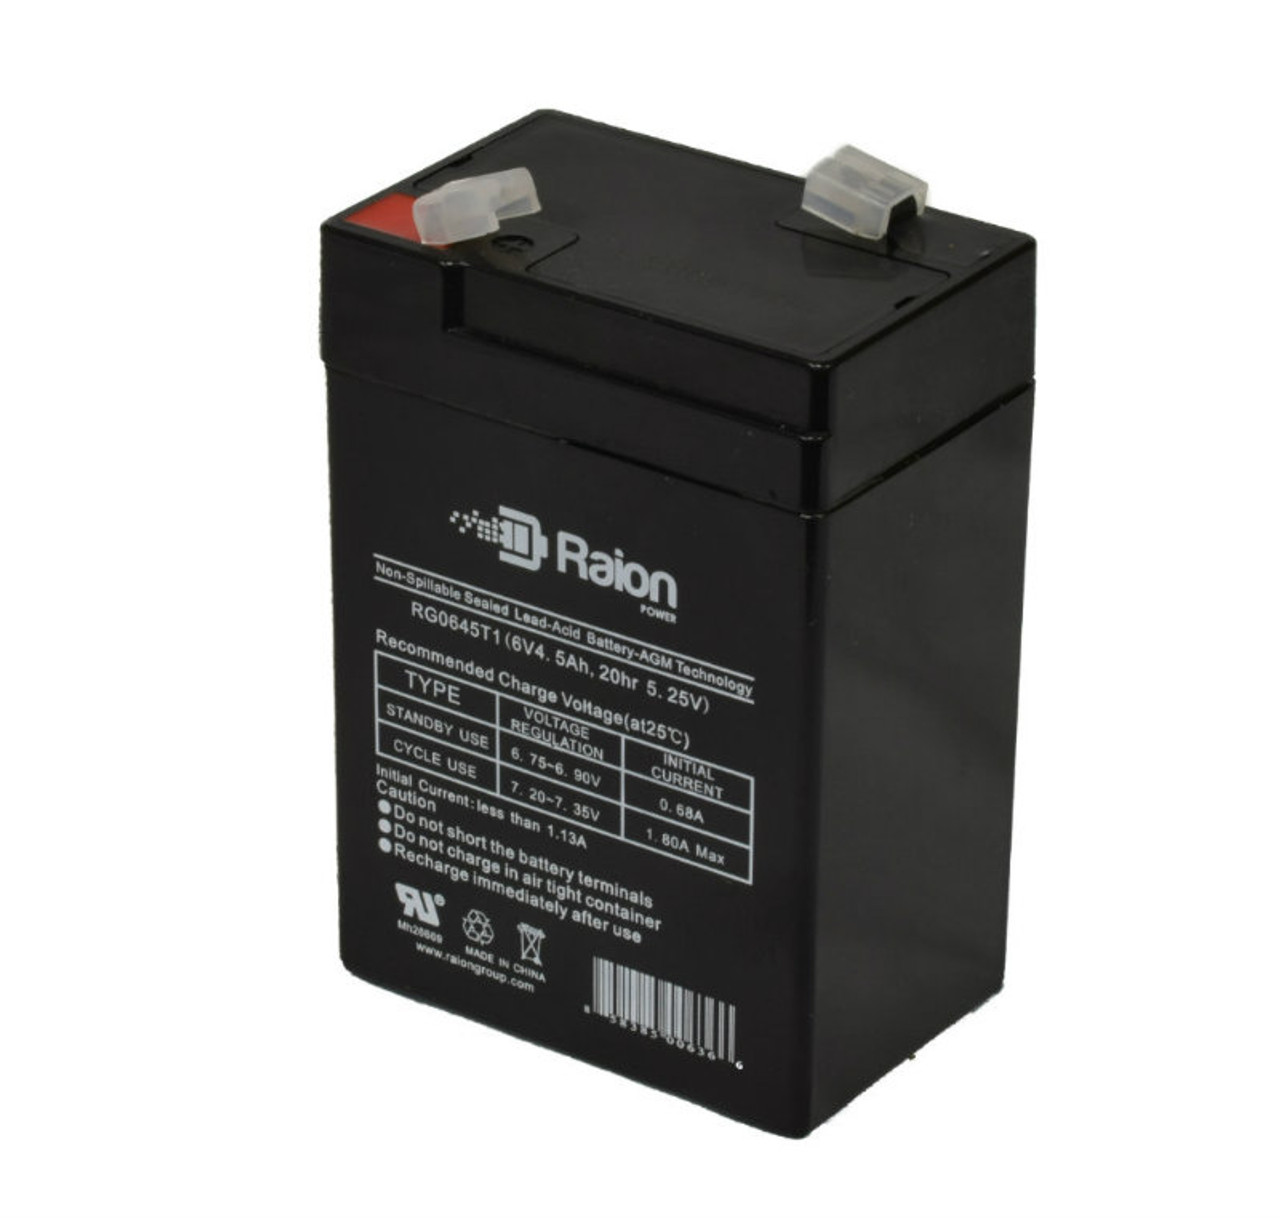 Raion Power RG0645T1 6V 4.5Ah Replacement Battery Cartridge for Sonnenschein DM2